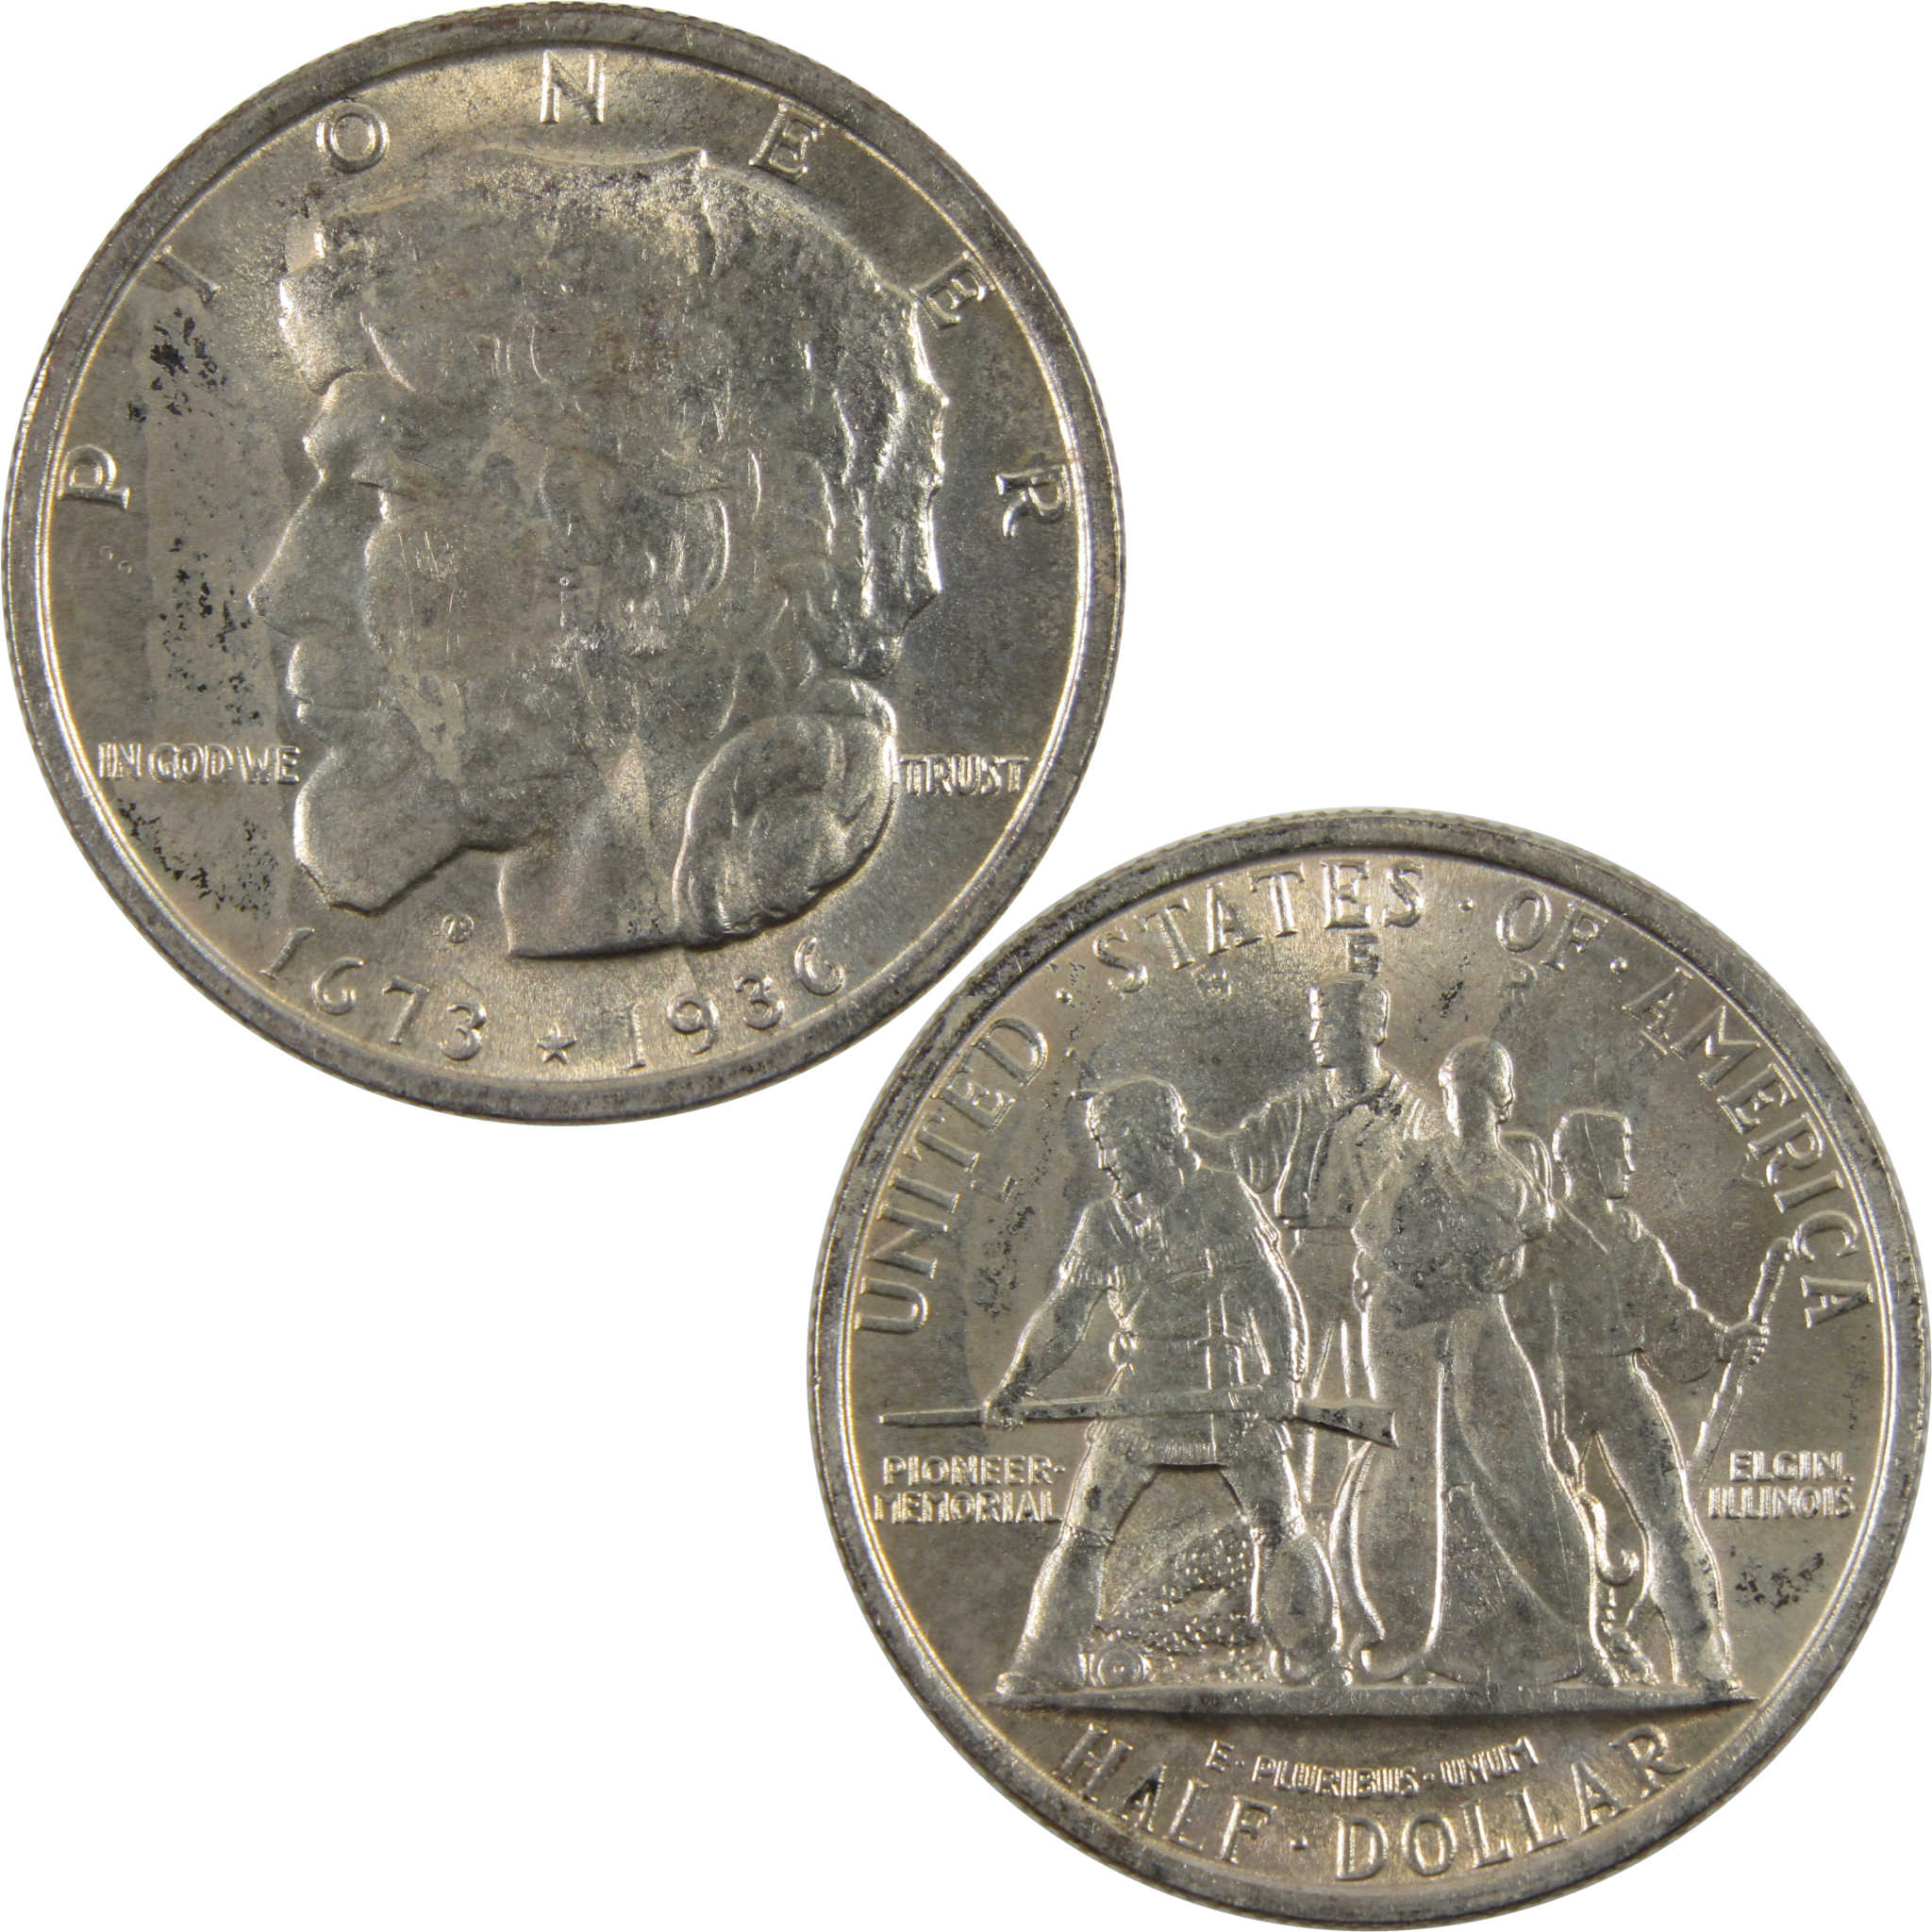 Elgin Illinois Commemorative Half Dollar 1936 Uncirculated SKU:I8970